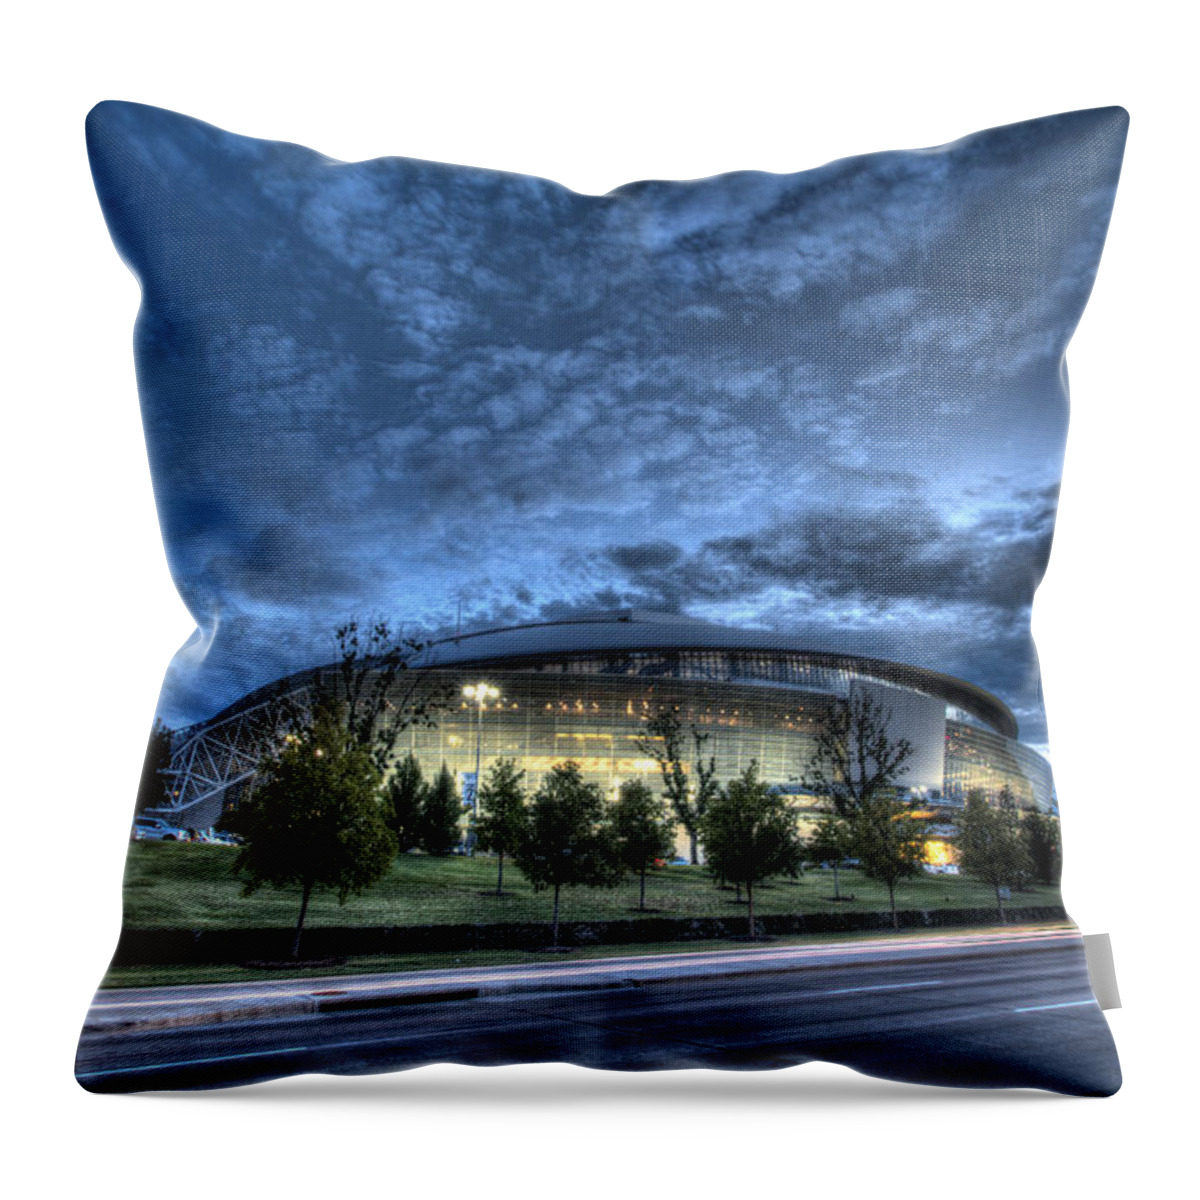 Dallas Cowboys Throw Pillow featuring the photograph Dallas Cowboys Stadium by Jonathan Davison